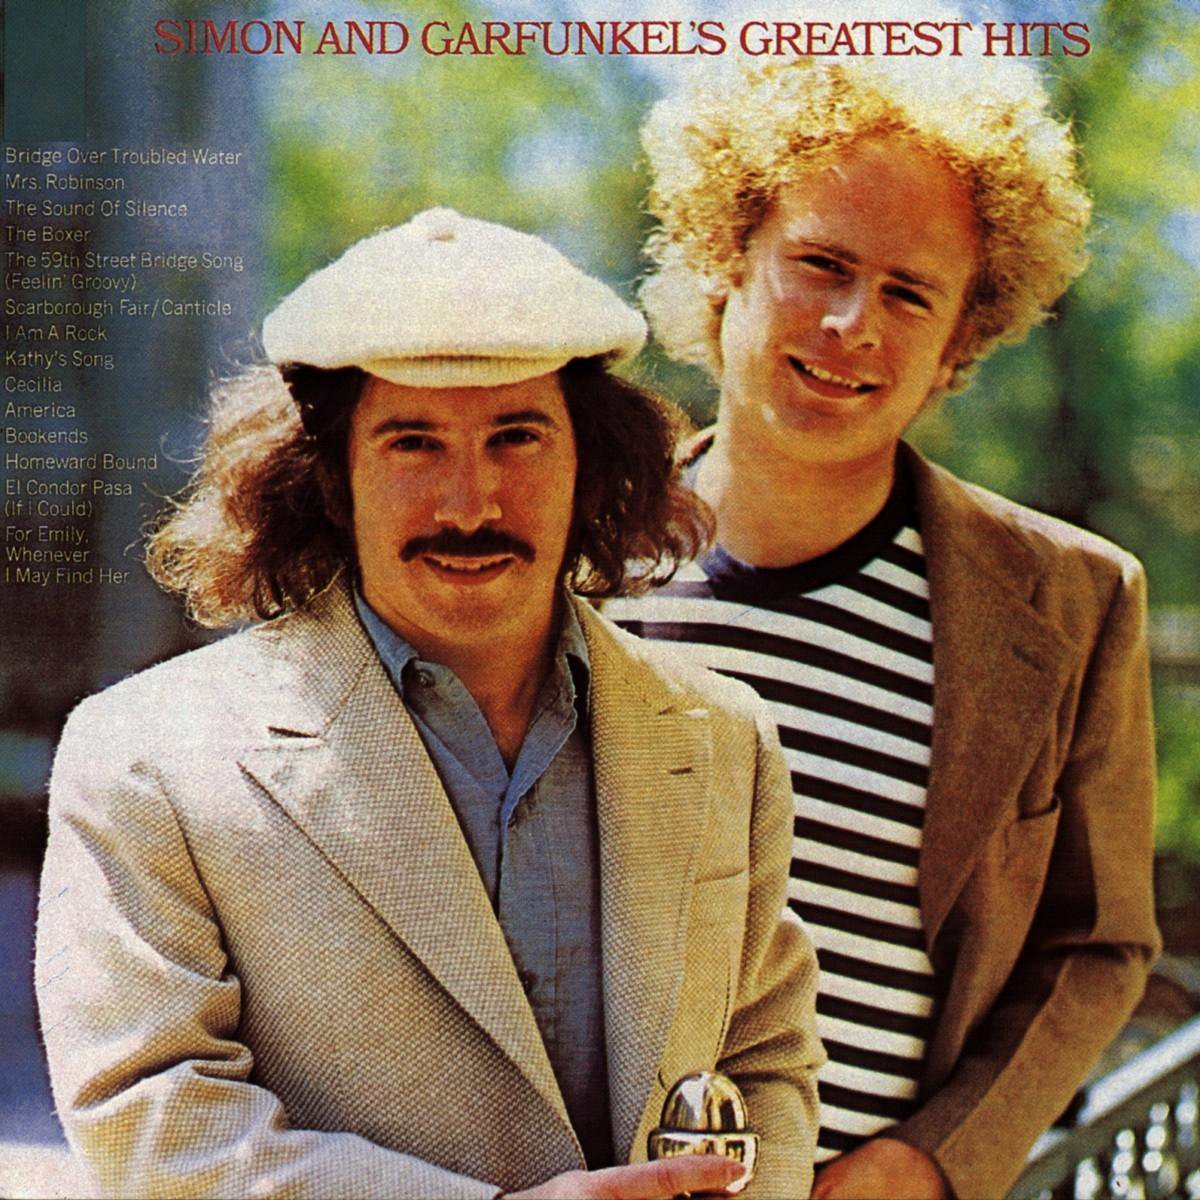 Simon and Garfunkel's Greatest Hits | Simon & Garfunkel image3